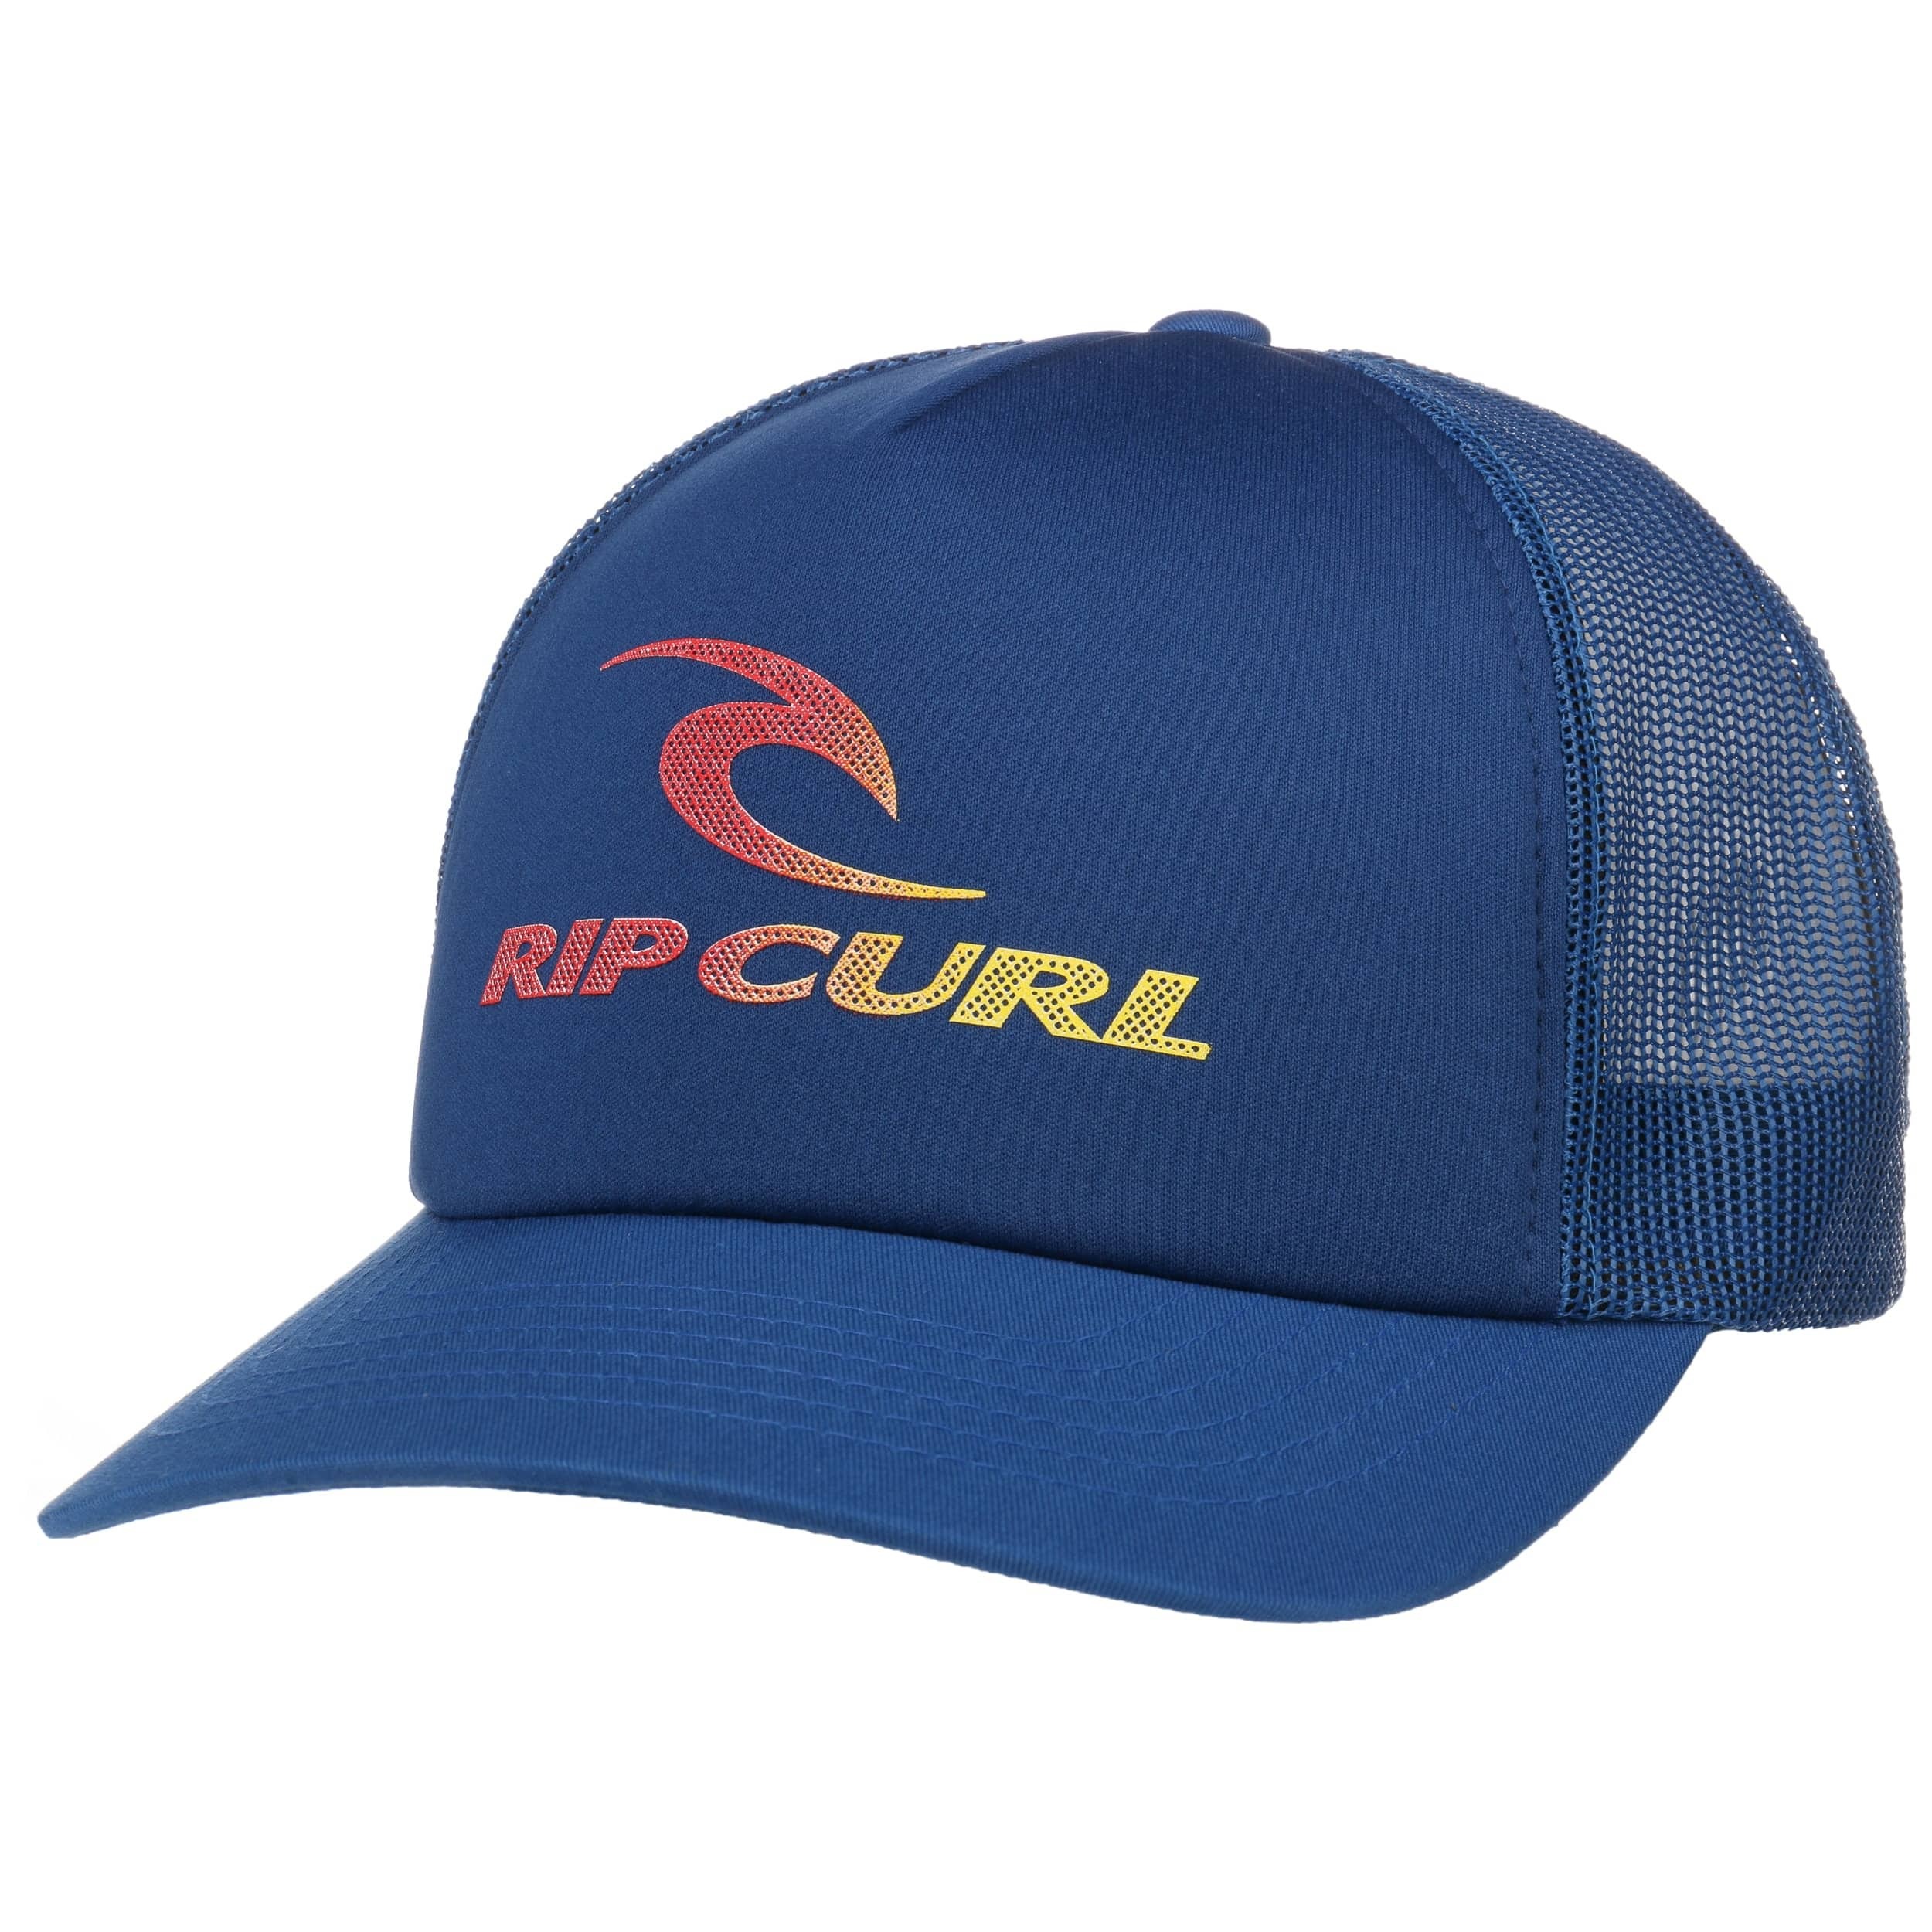 Casquette Trucker Surfer Company by Rip Curl